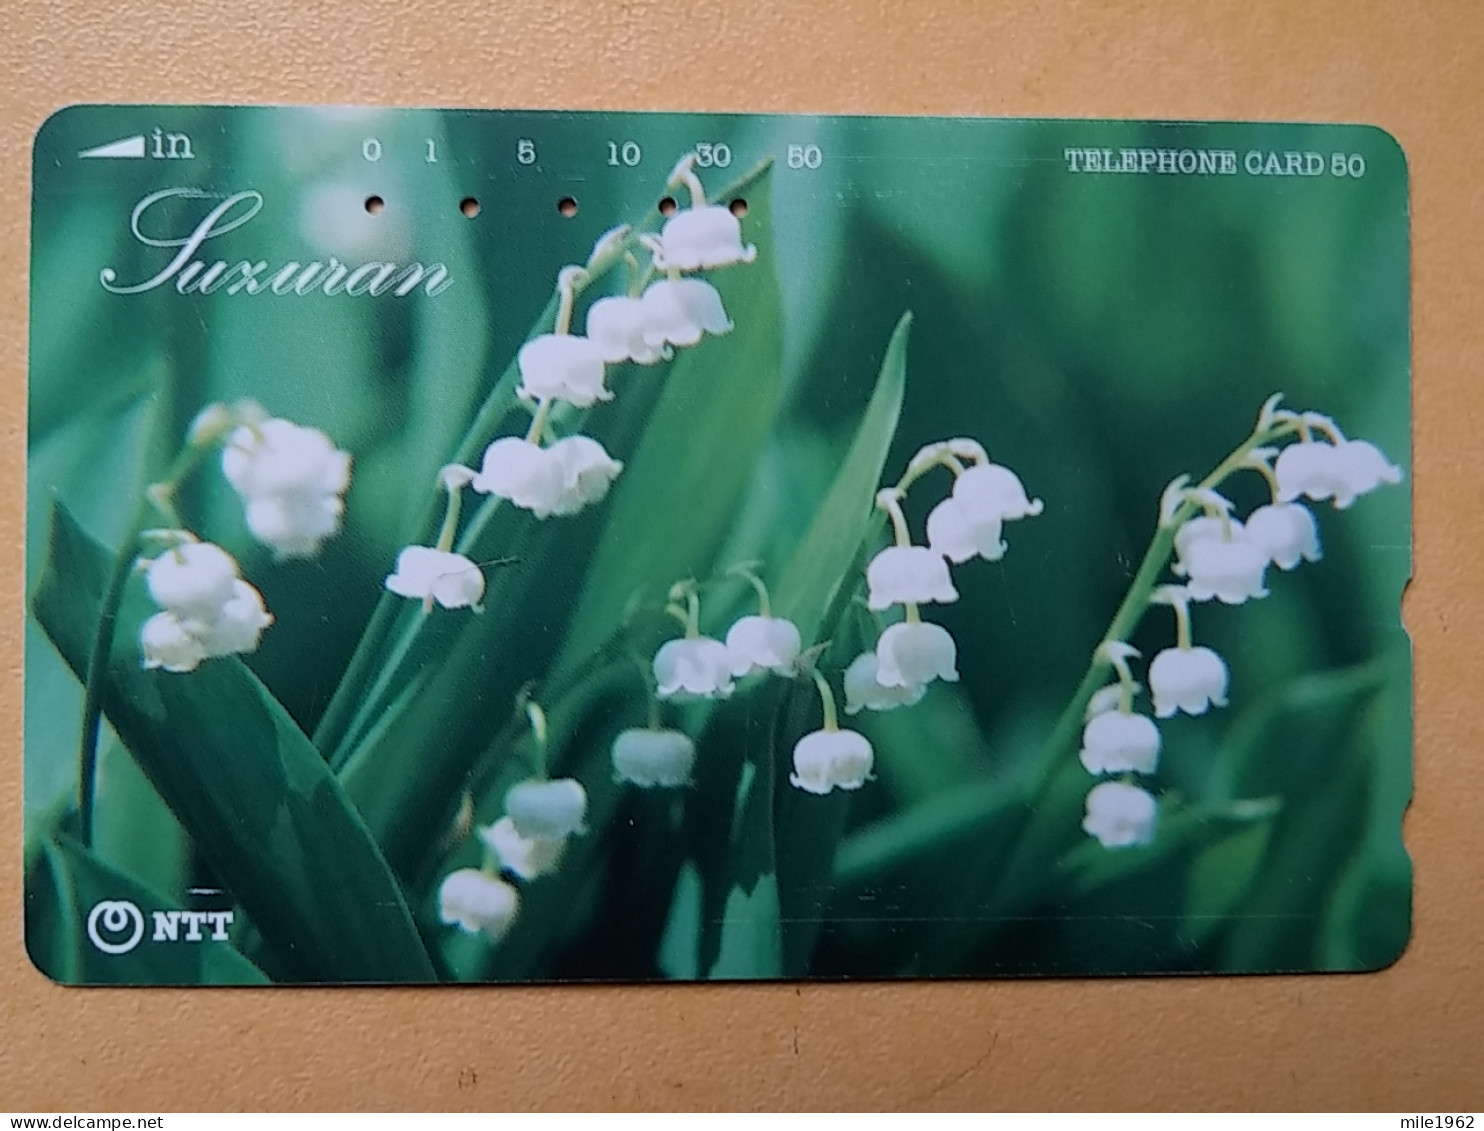 T-383 - JAPAN, Japon, Nipon, TELECARD, PHONECARD, Flower, Fleur, NTT 431-825 - Blumen